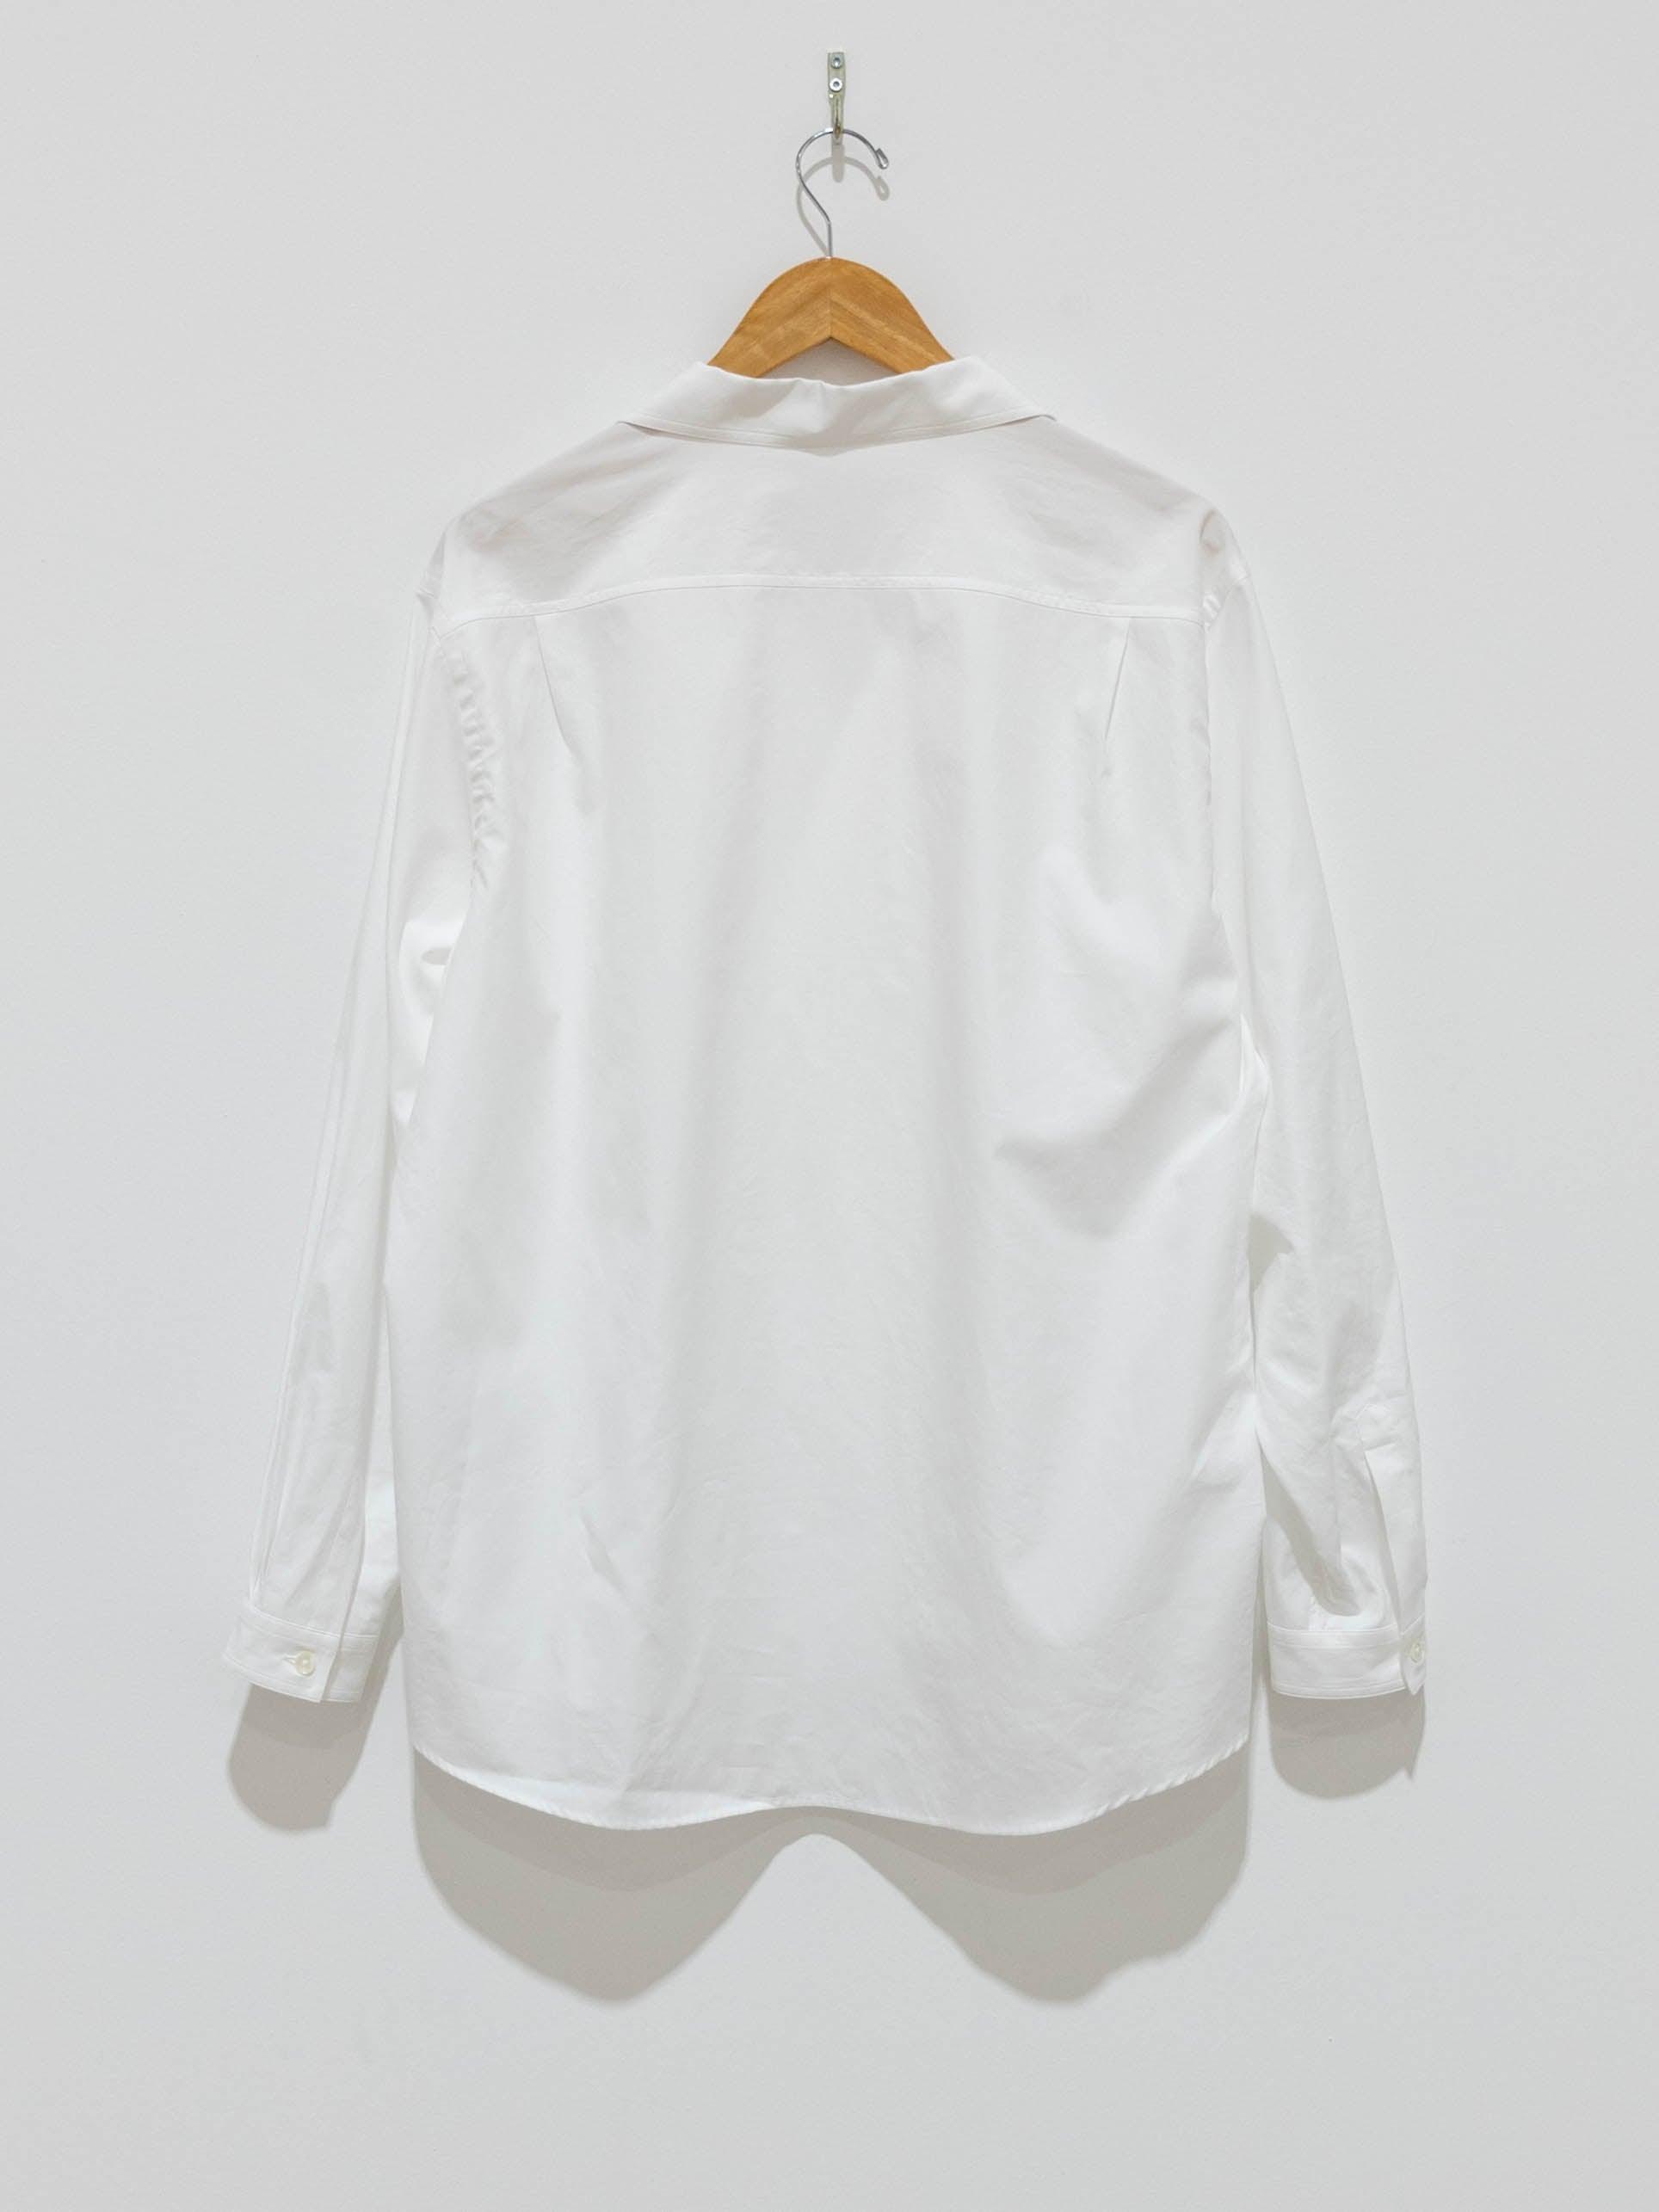 Namu Shop - Auralee Washed Finx Twill Pullover Shirt - White